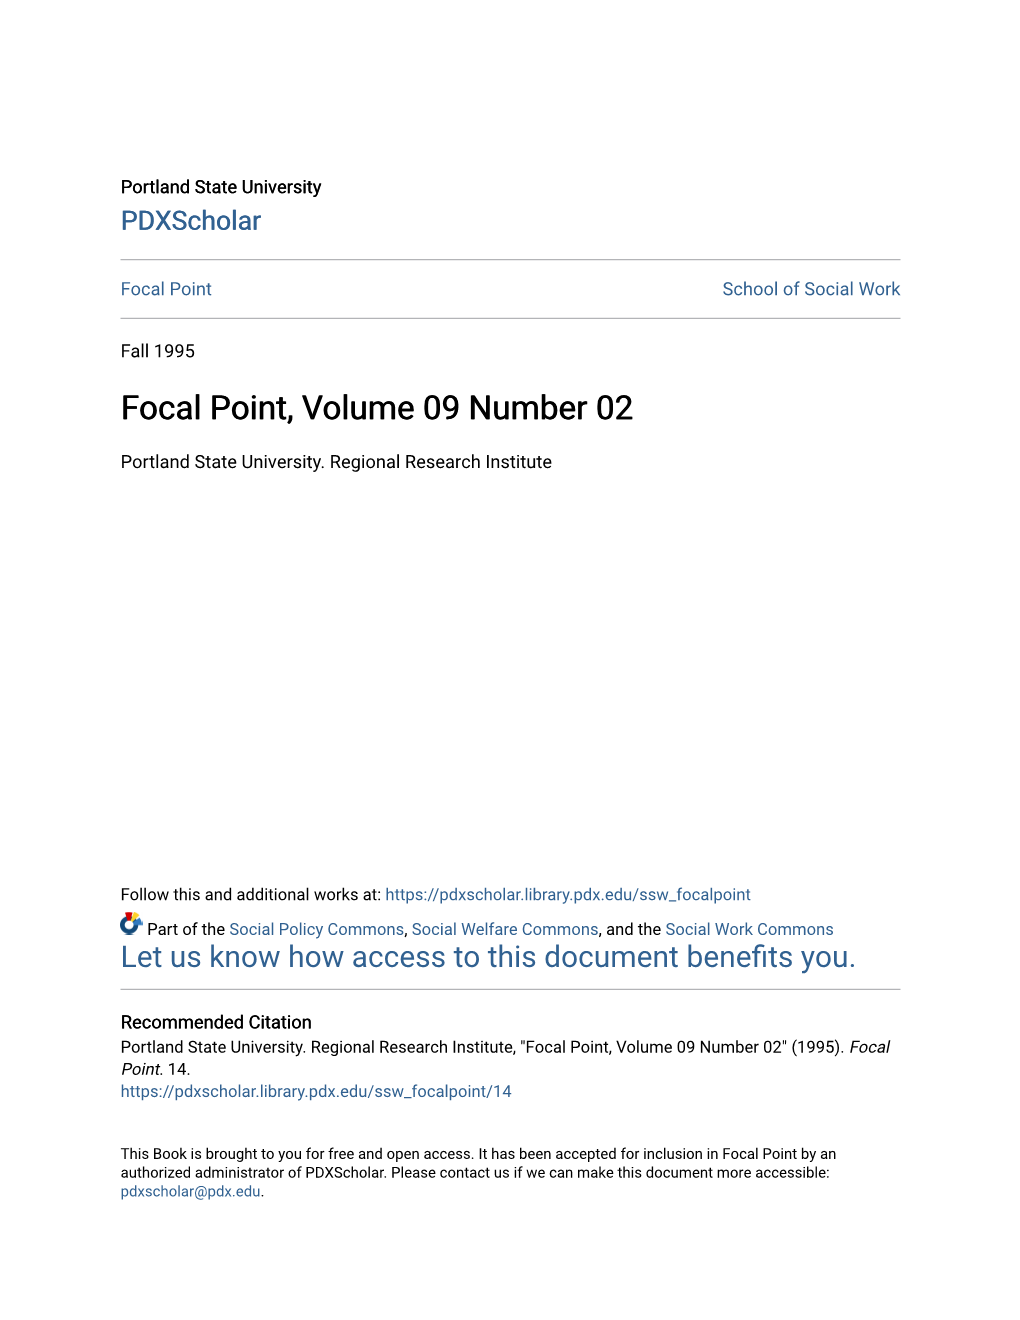 Focal Point, Volume 09 Number 02